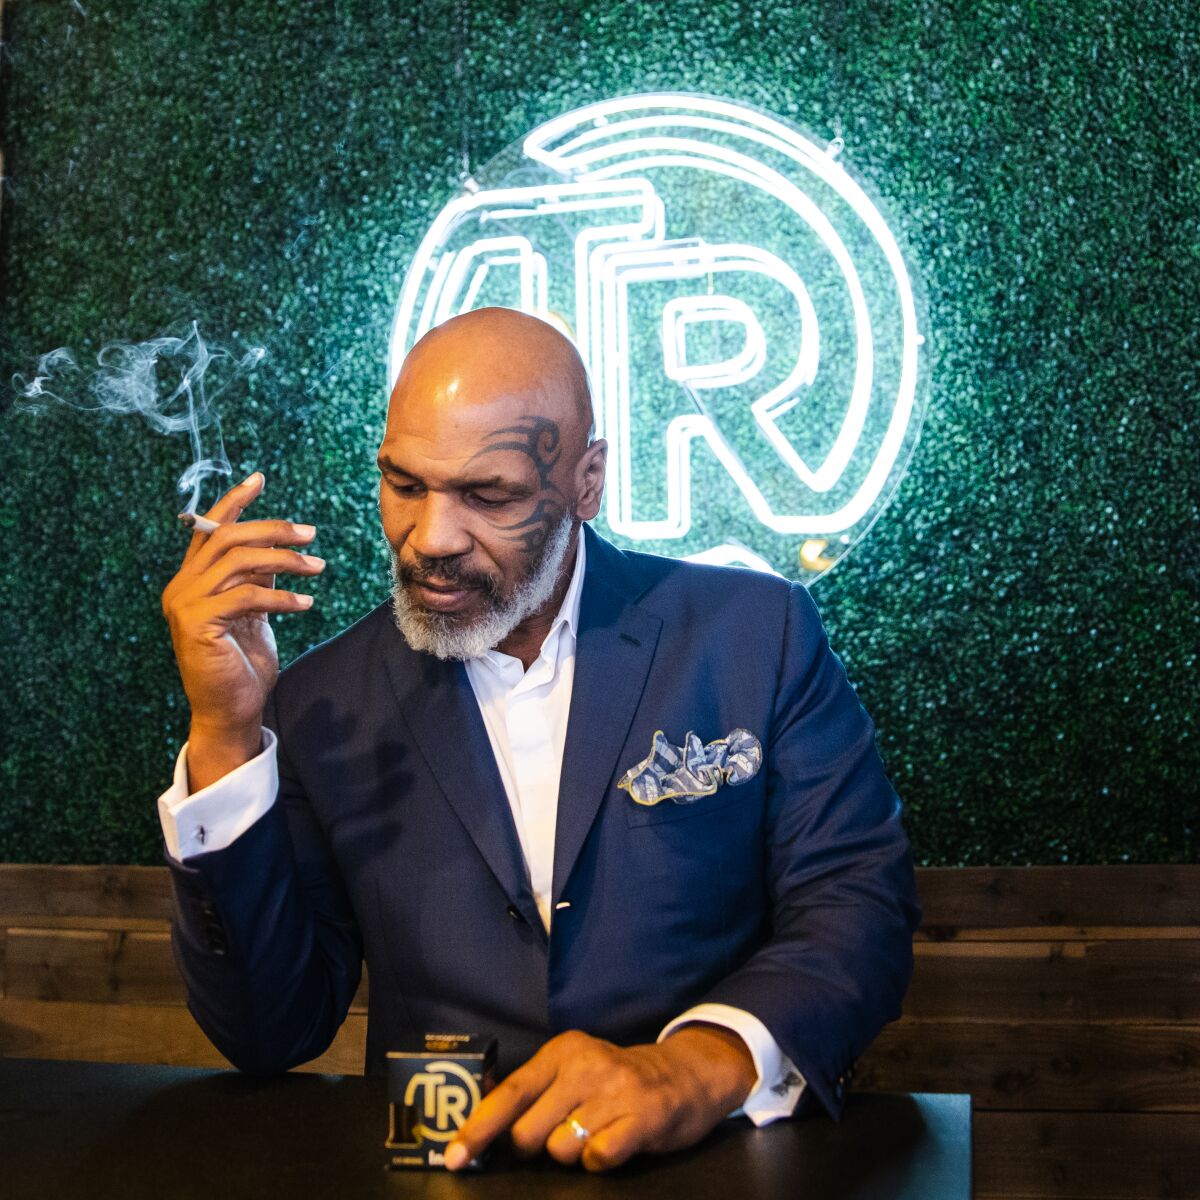 Mike Tyson has his own marijuana line called Tyson Ranch.